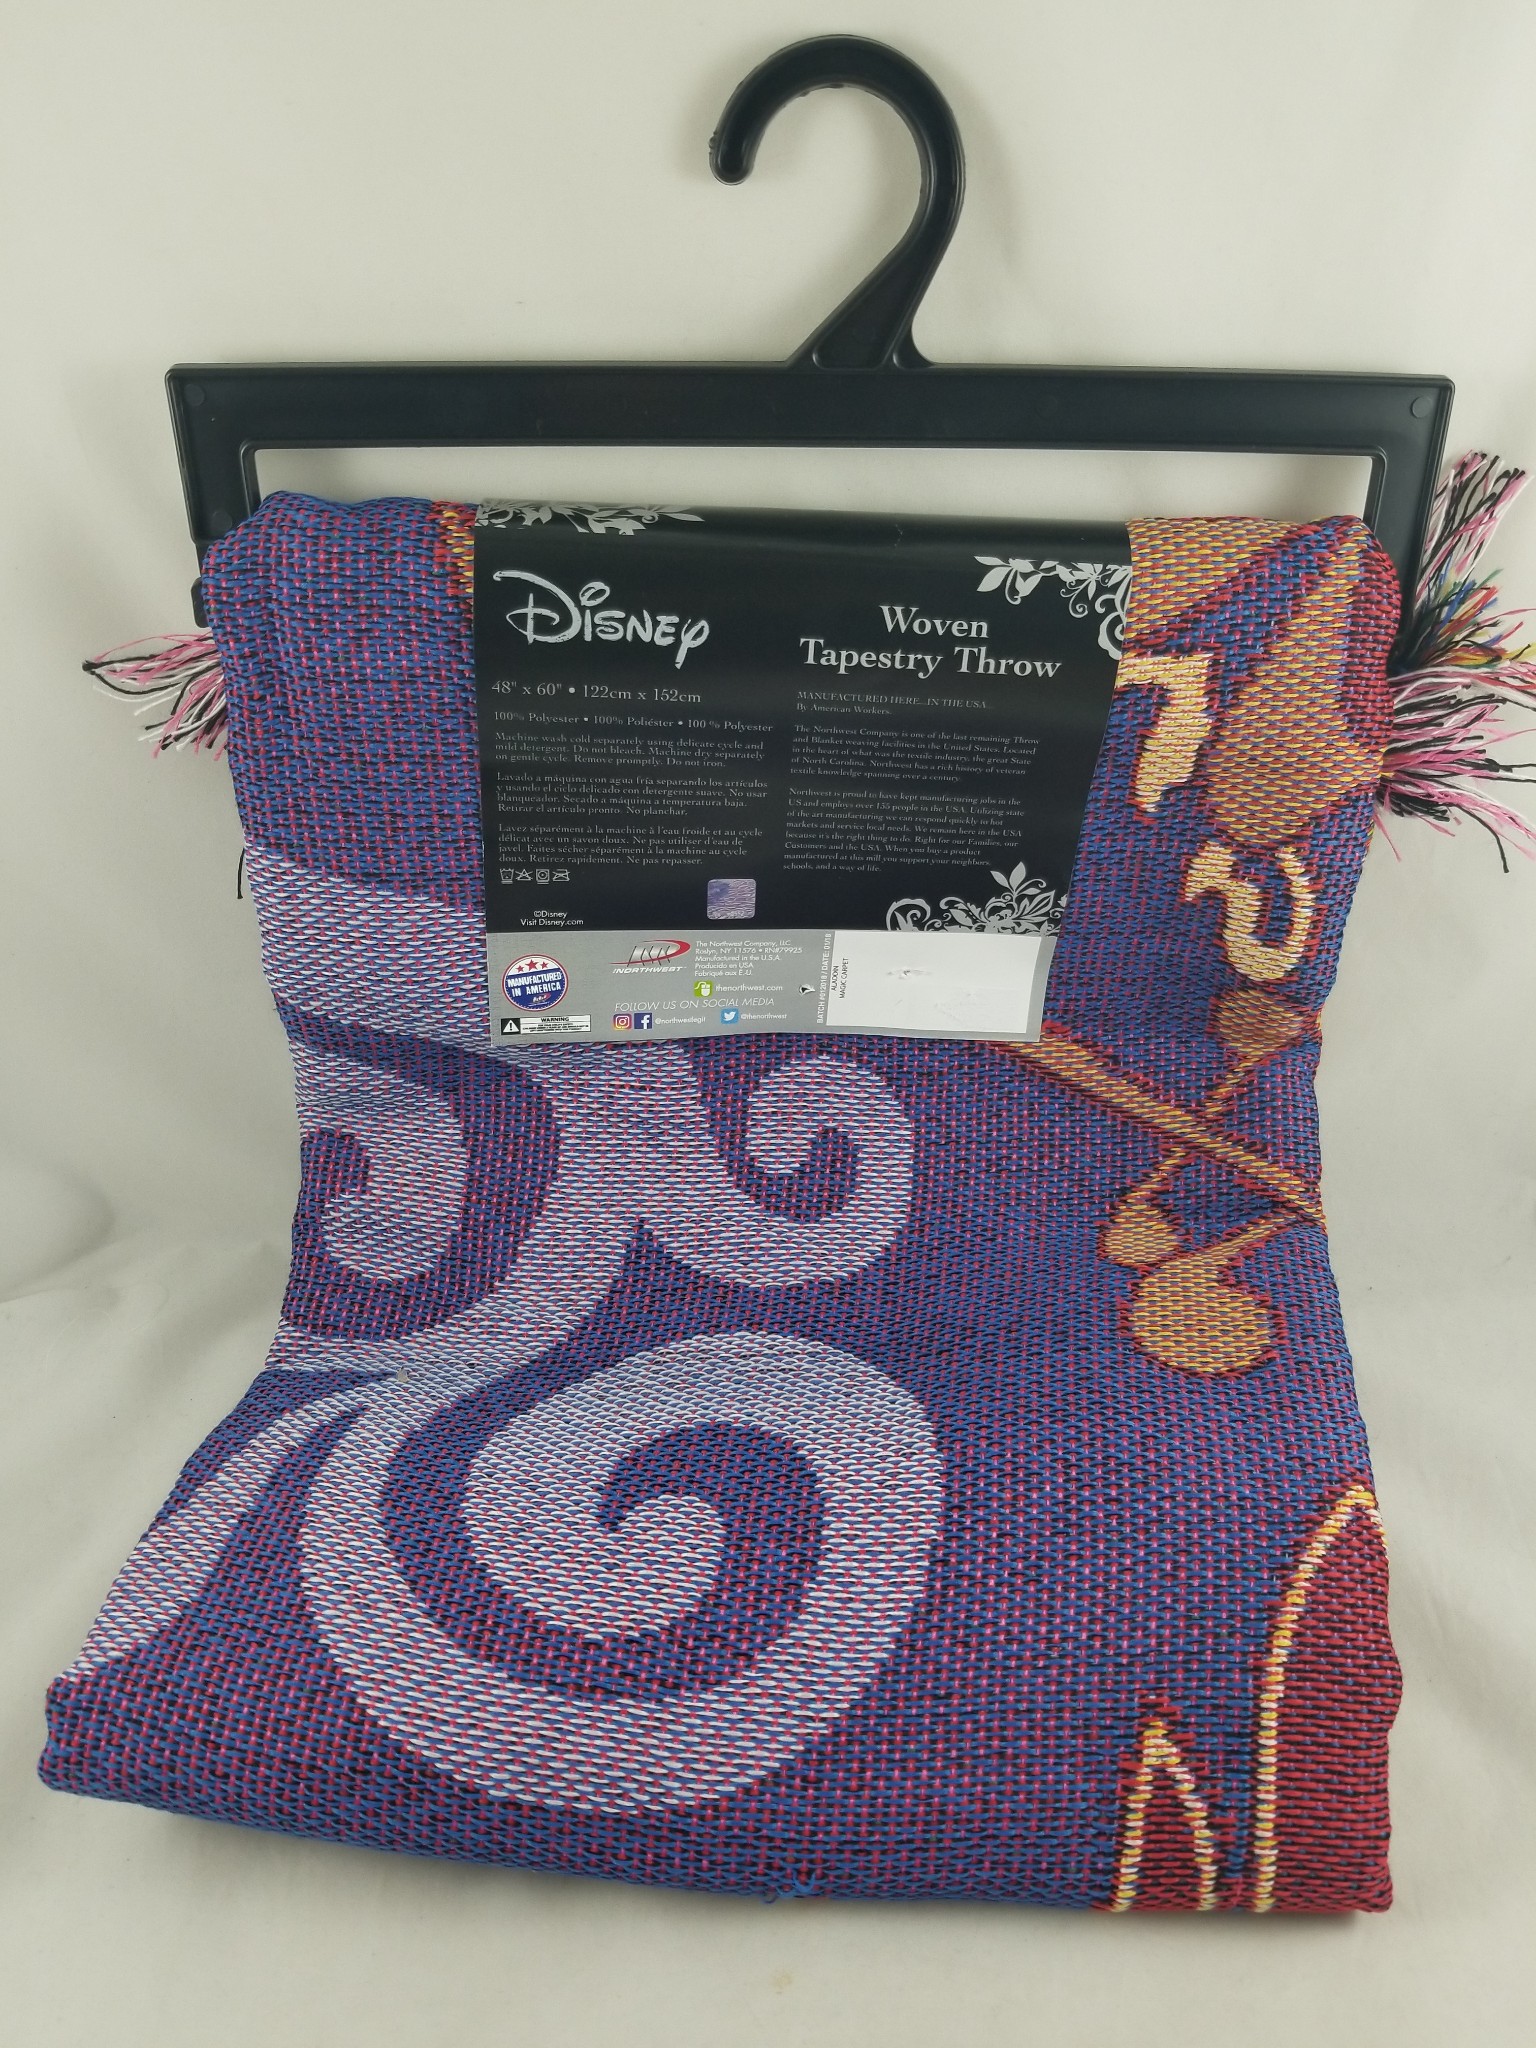 New Disney Aladdin Magic Carpet Woven Tapestry Throw Blanket 48"X60" eBay